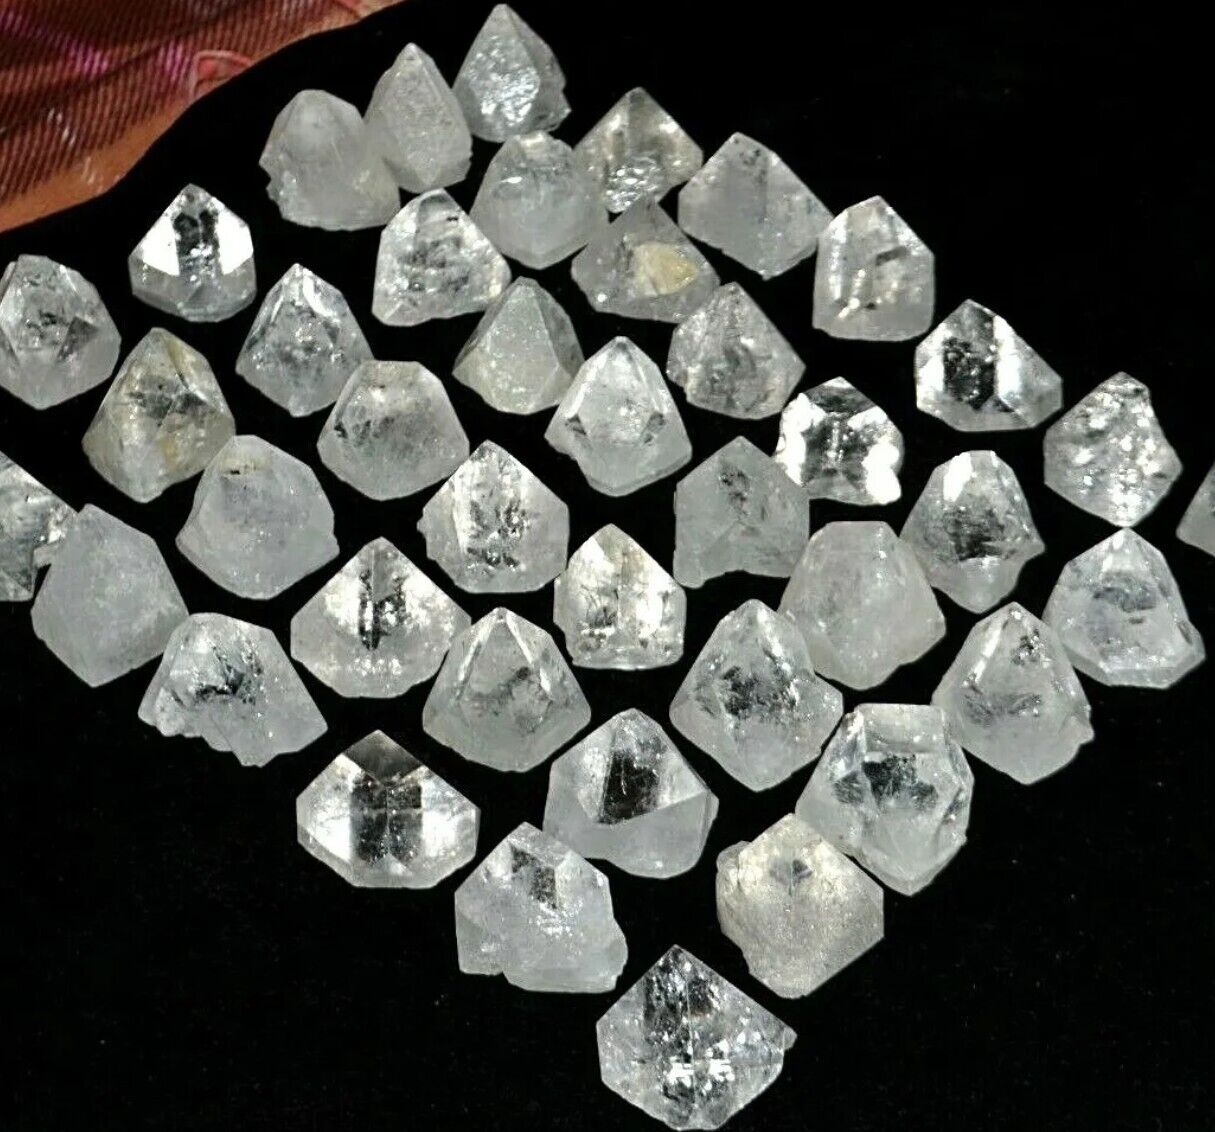 Bulk Apophyllite Stone Tips Lots 1 to 500pcs - Pyramid Minerals Specimen